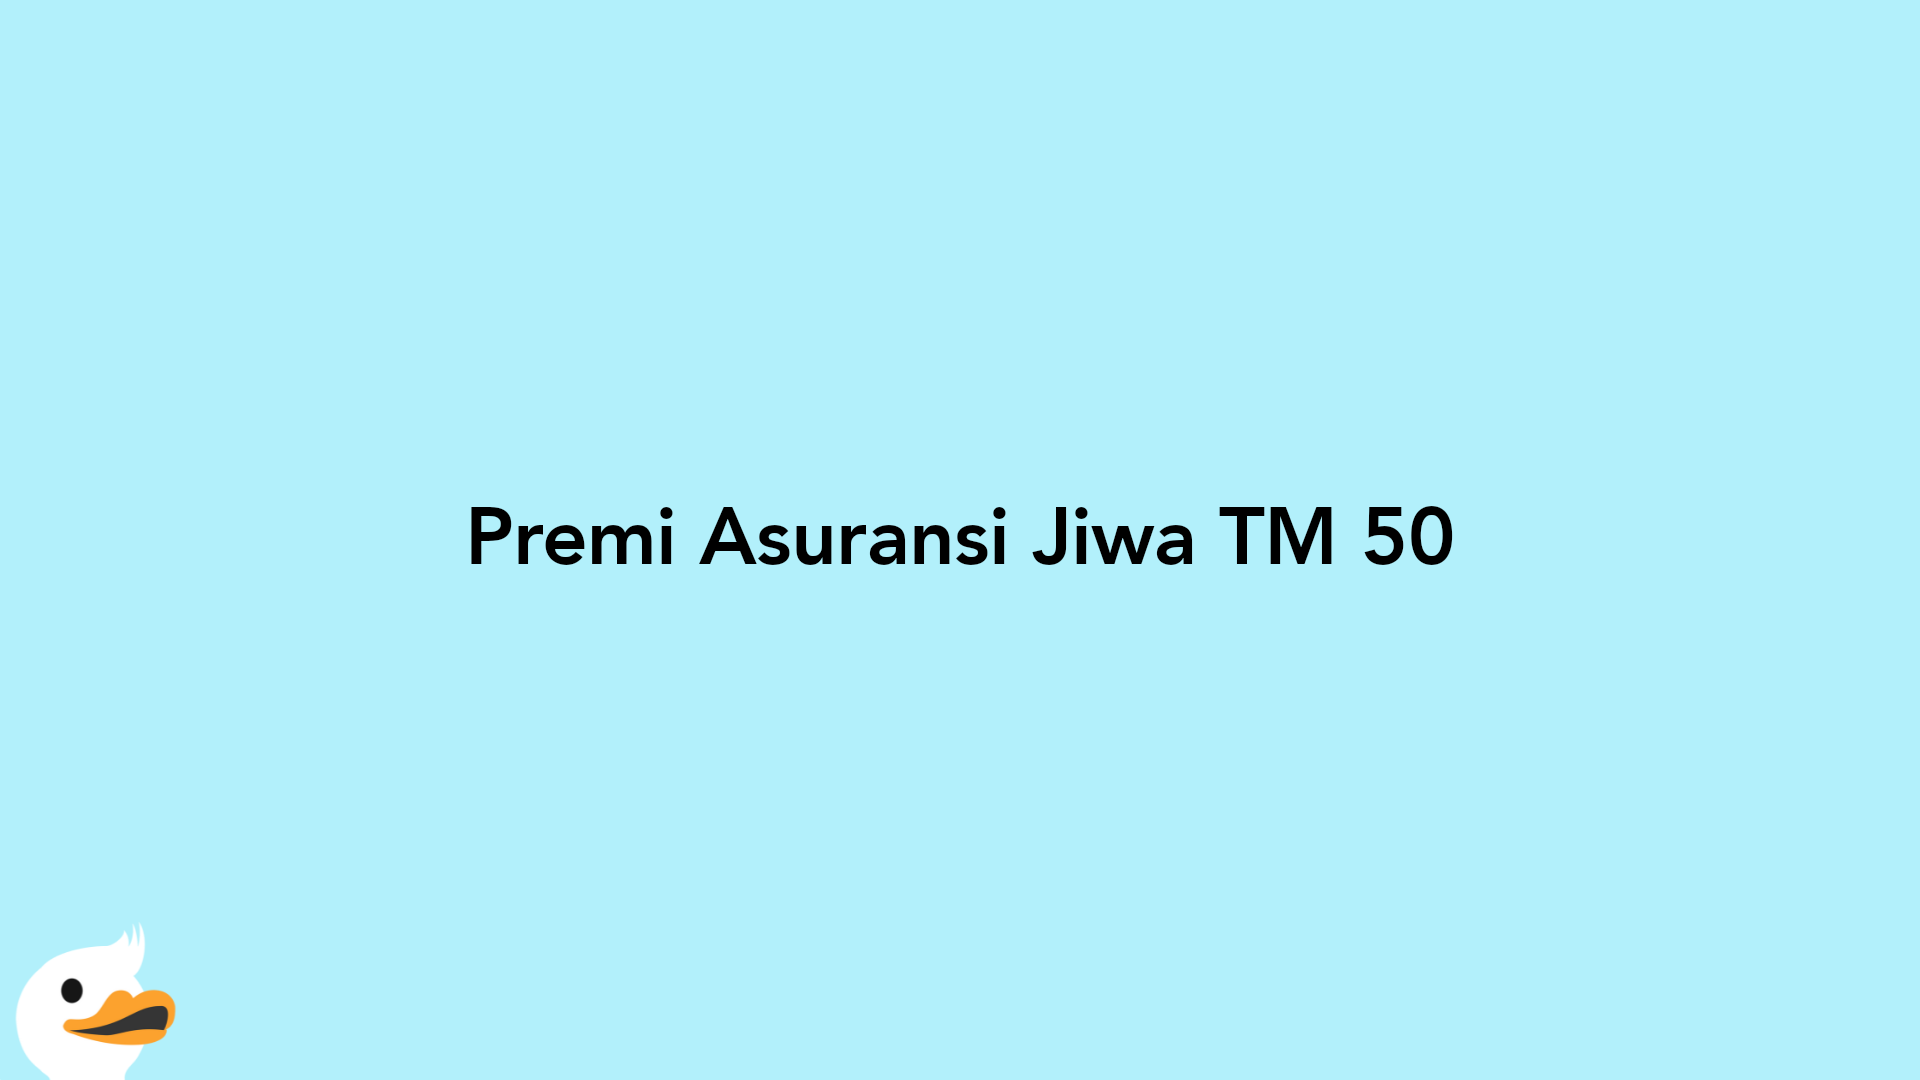 Premi Asuransi Jiwa TM 50